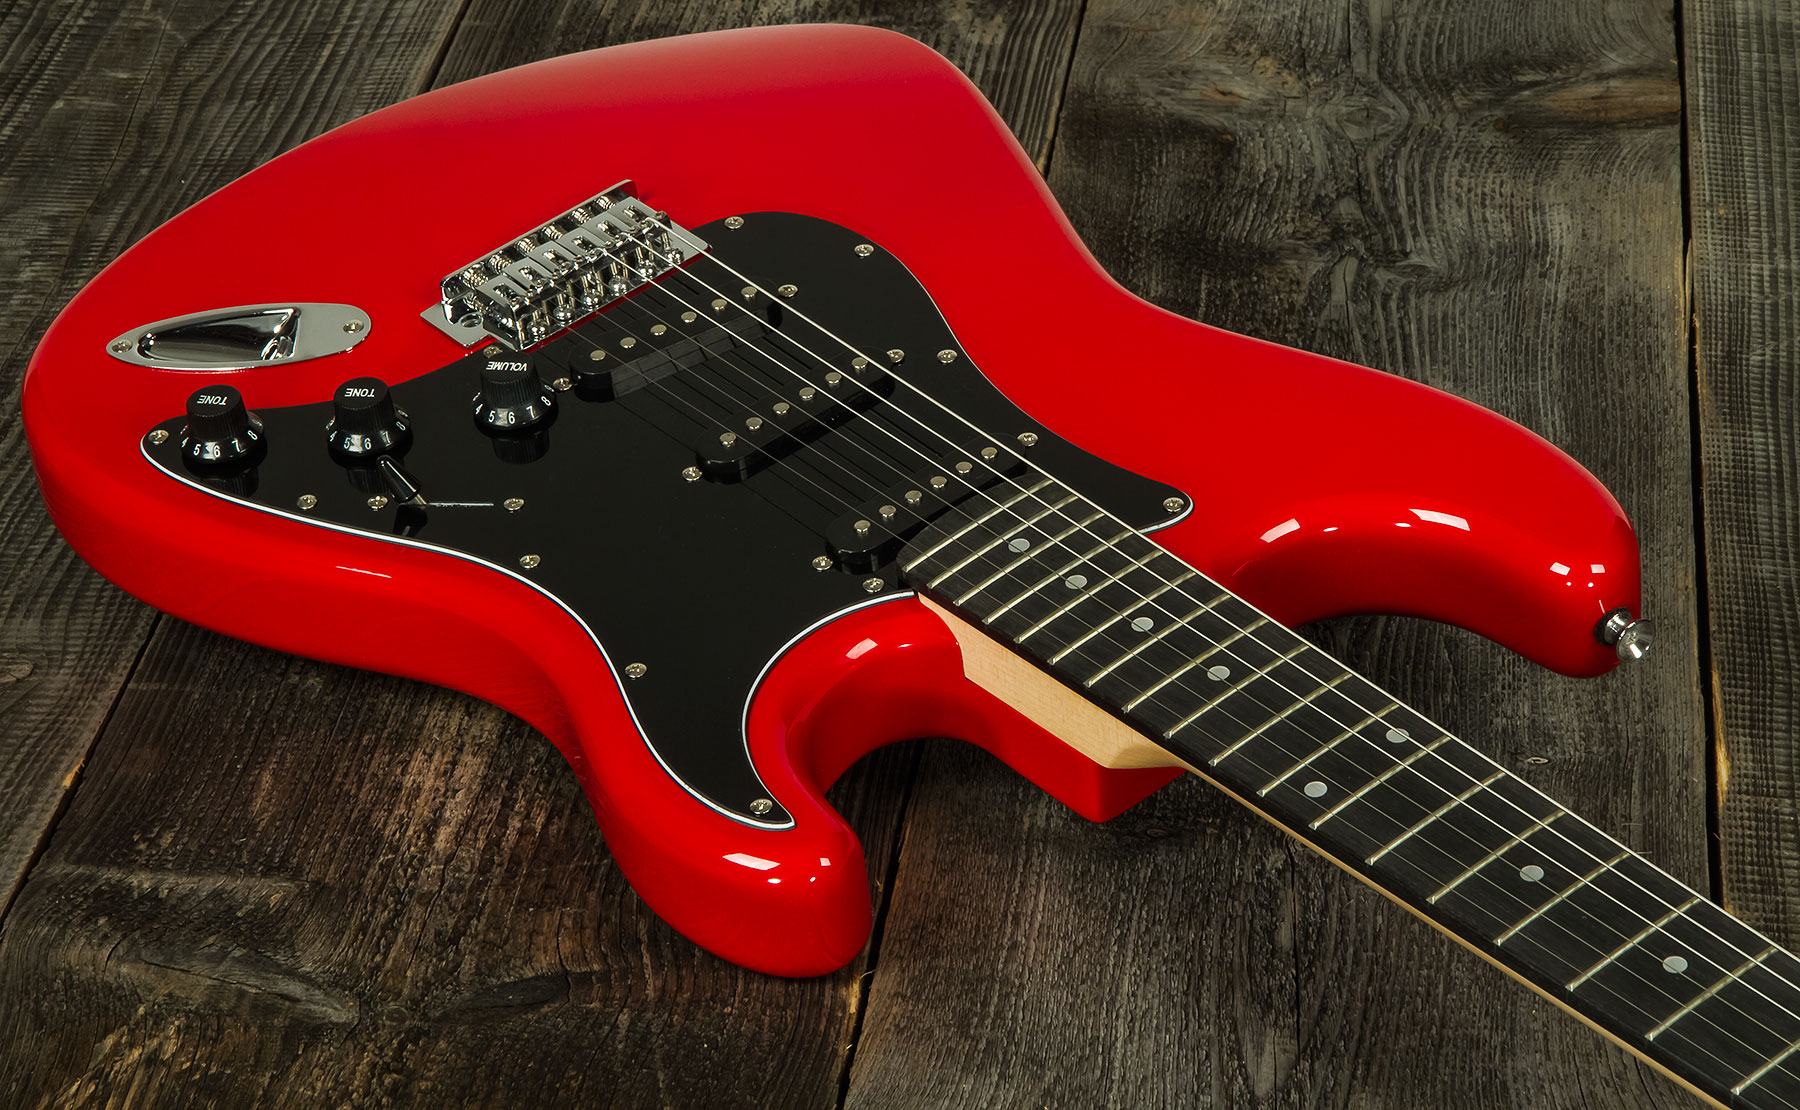 Eastone Str70t +marshall Mg10 10w +cable +mediators +housse - Ferrari Red - Electric guitar set - Variation 2